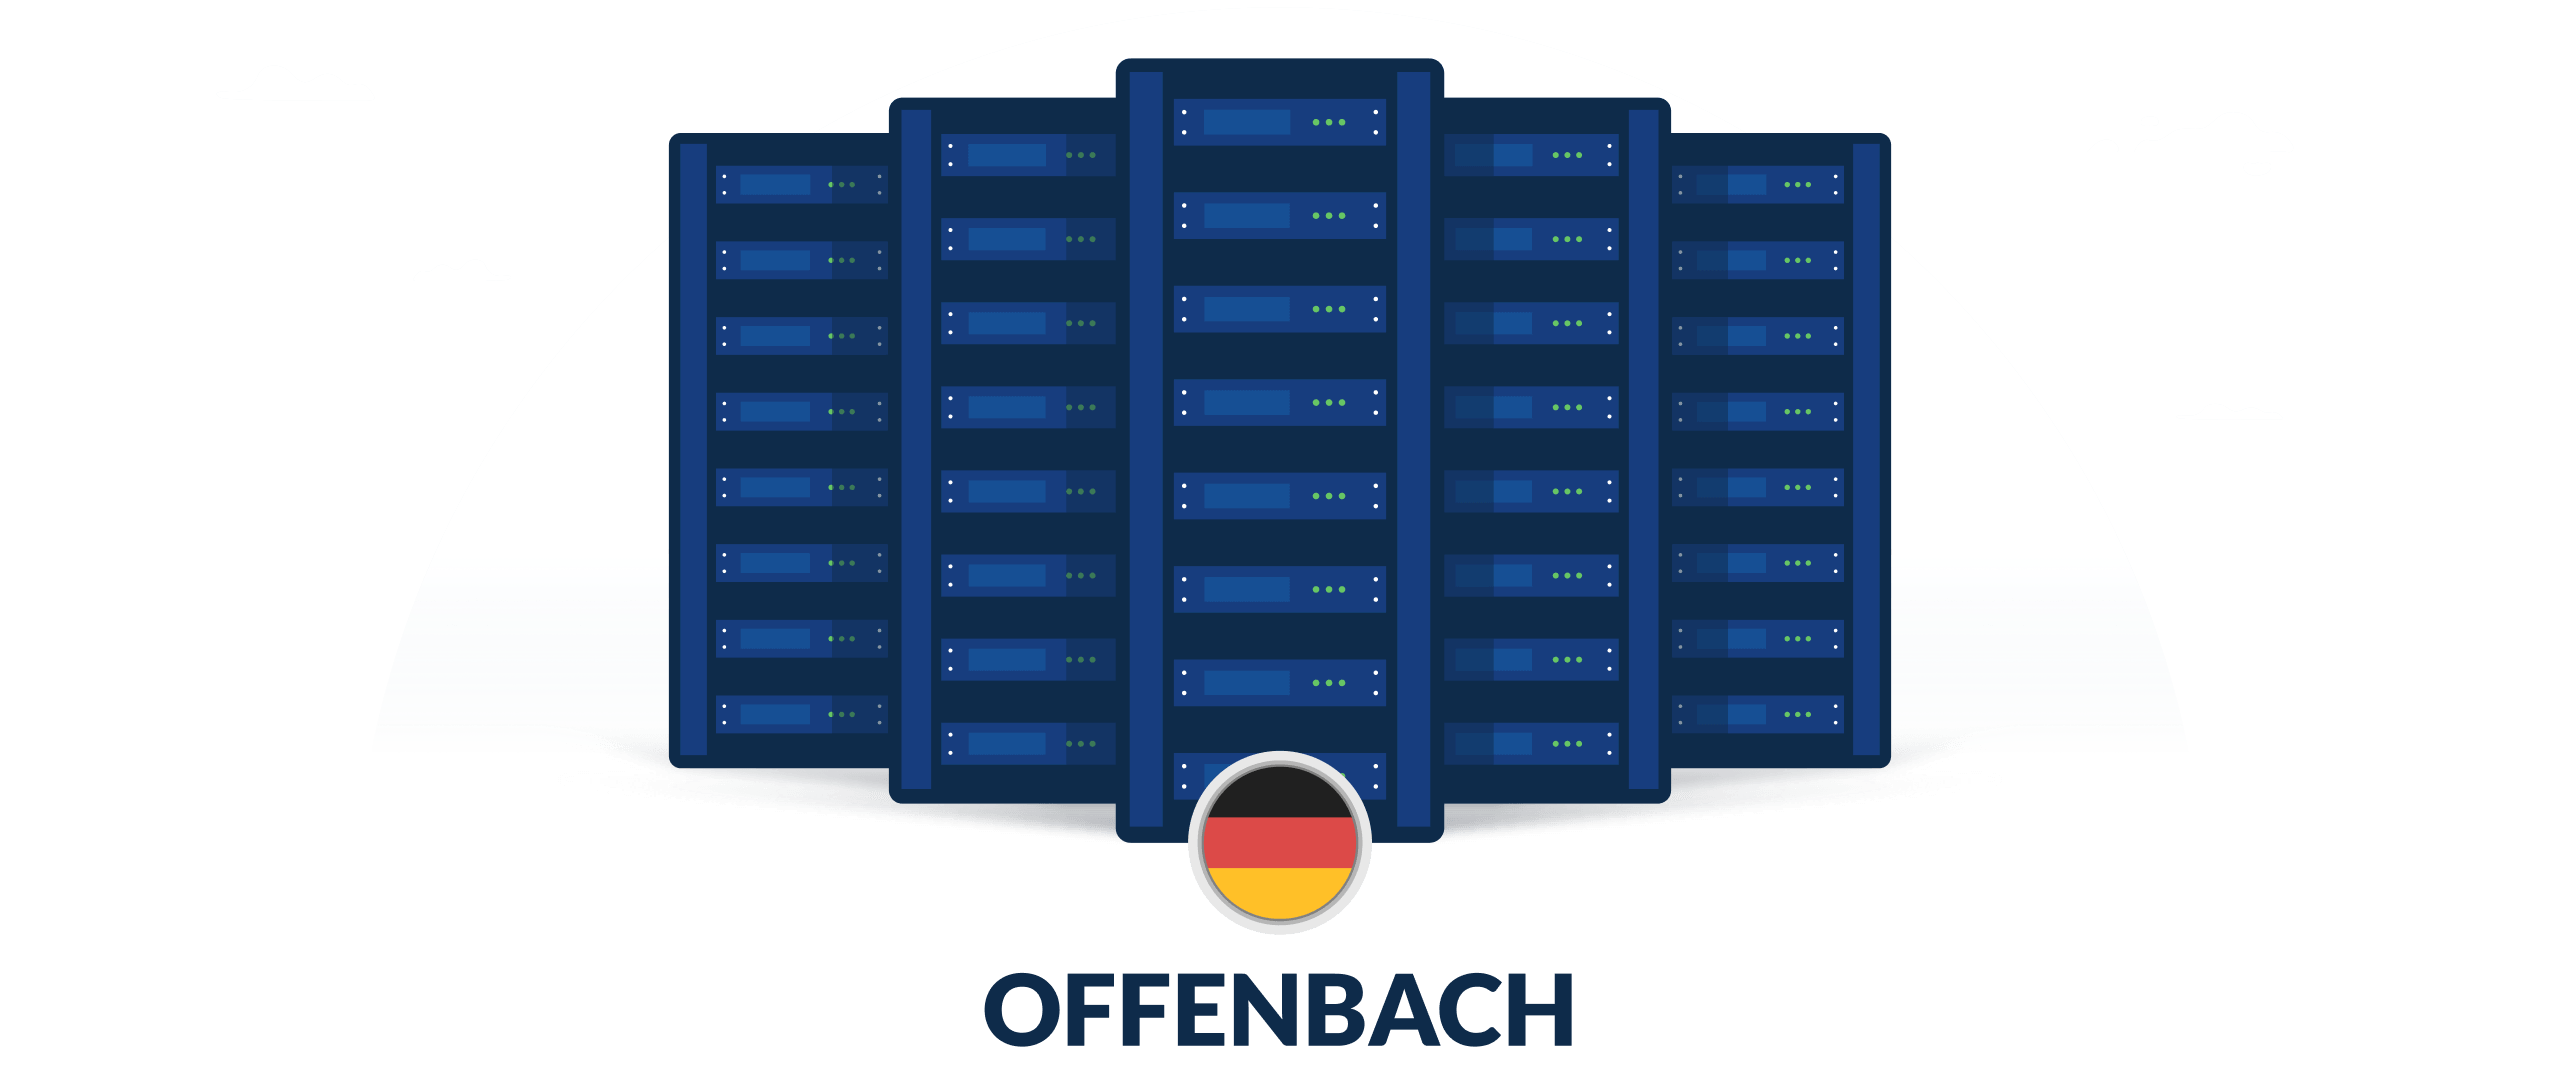 VPN servers in Offenbach, Germany